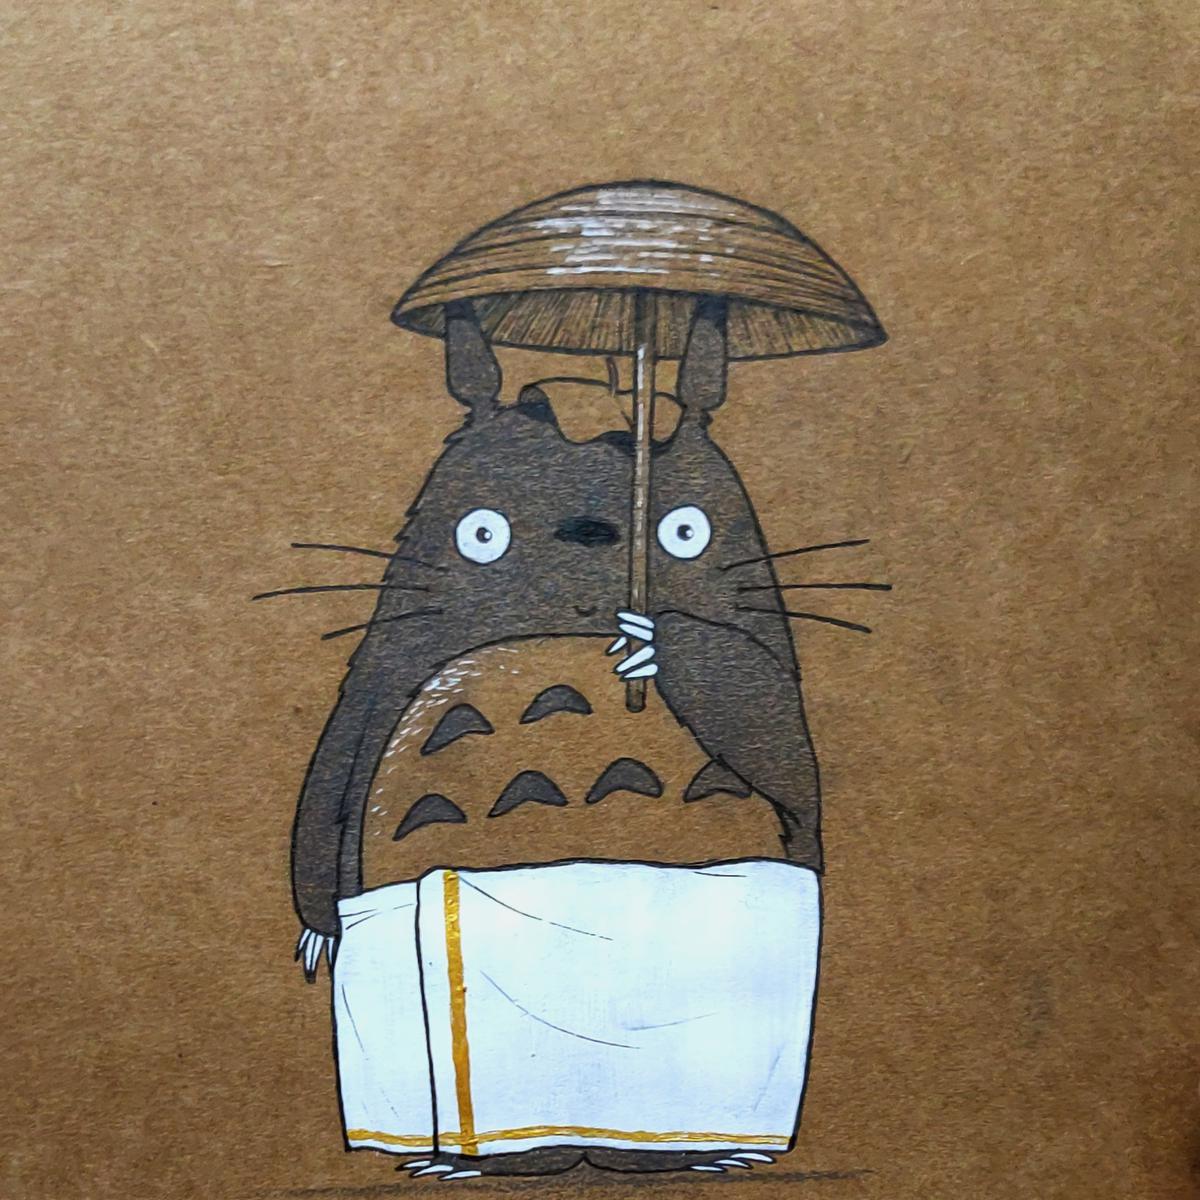 'Totoronam', Treasa's fan art of the famous magical spirit Totoro from Studio Ghibli's My Neighbor Totoro (1986)